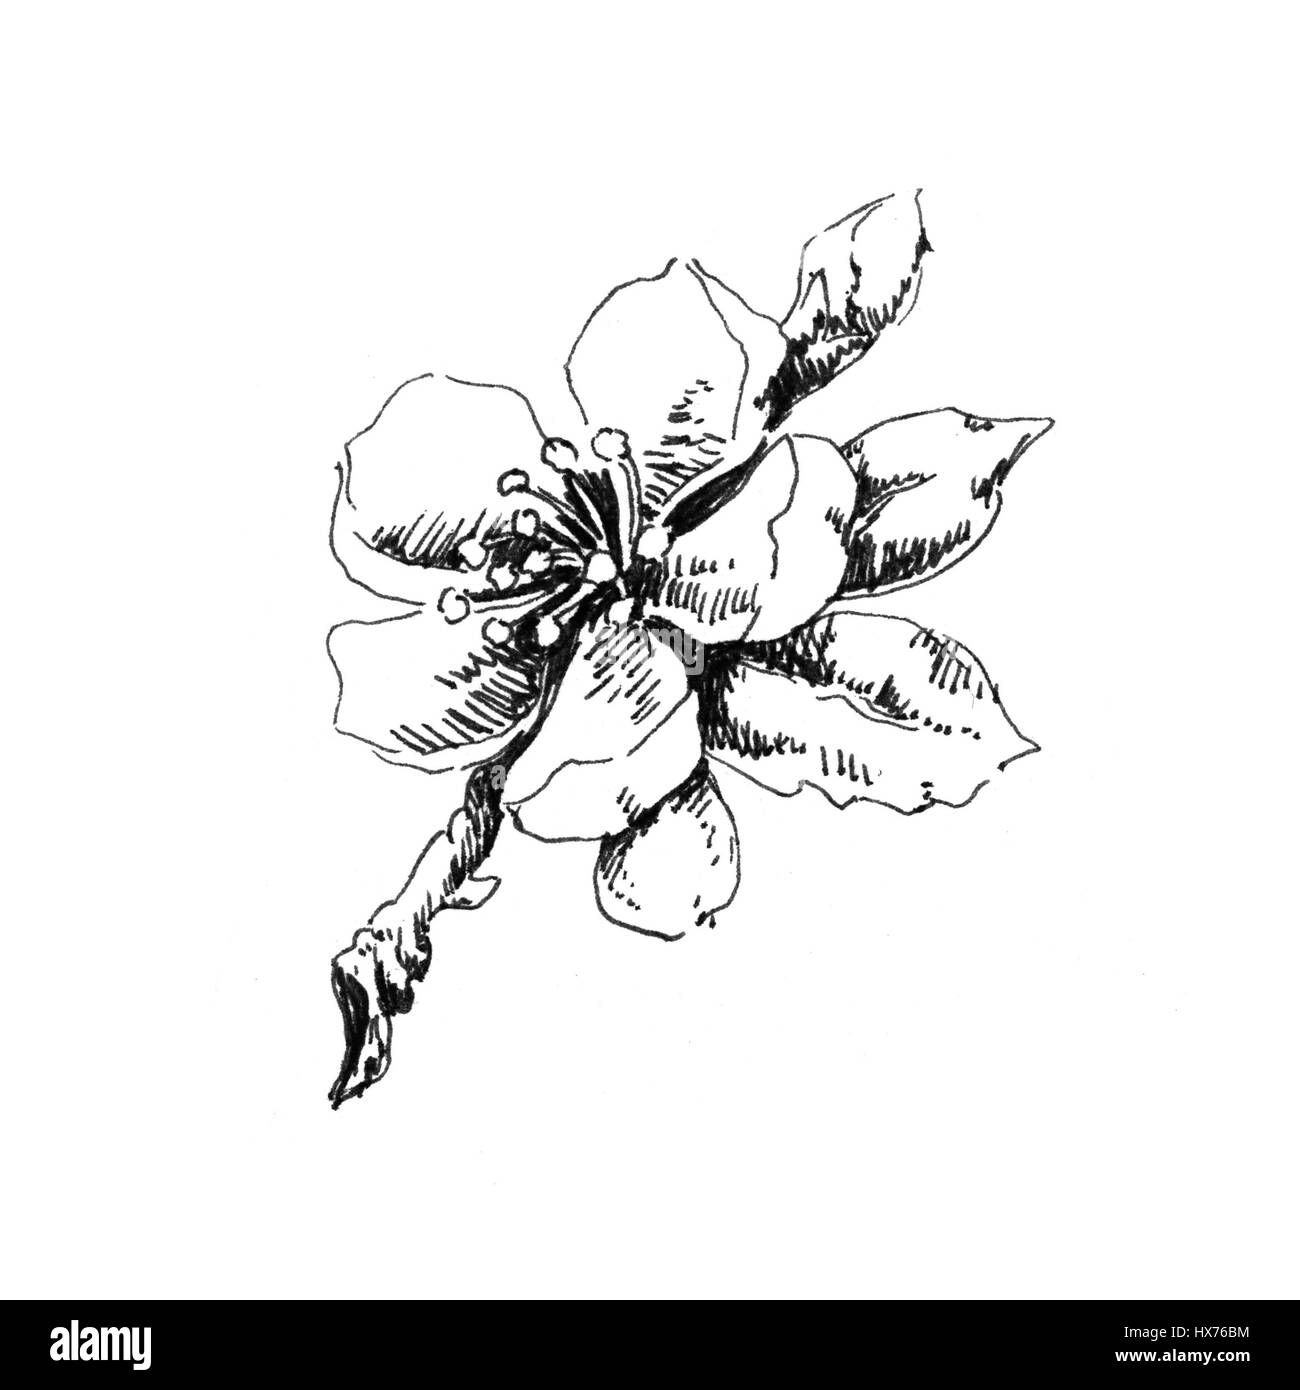 Flowering apple tree branch. Hand drawn sketch Stock Photo - Alamy